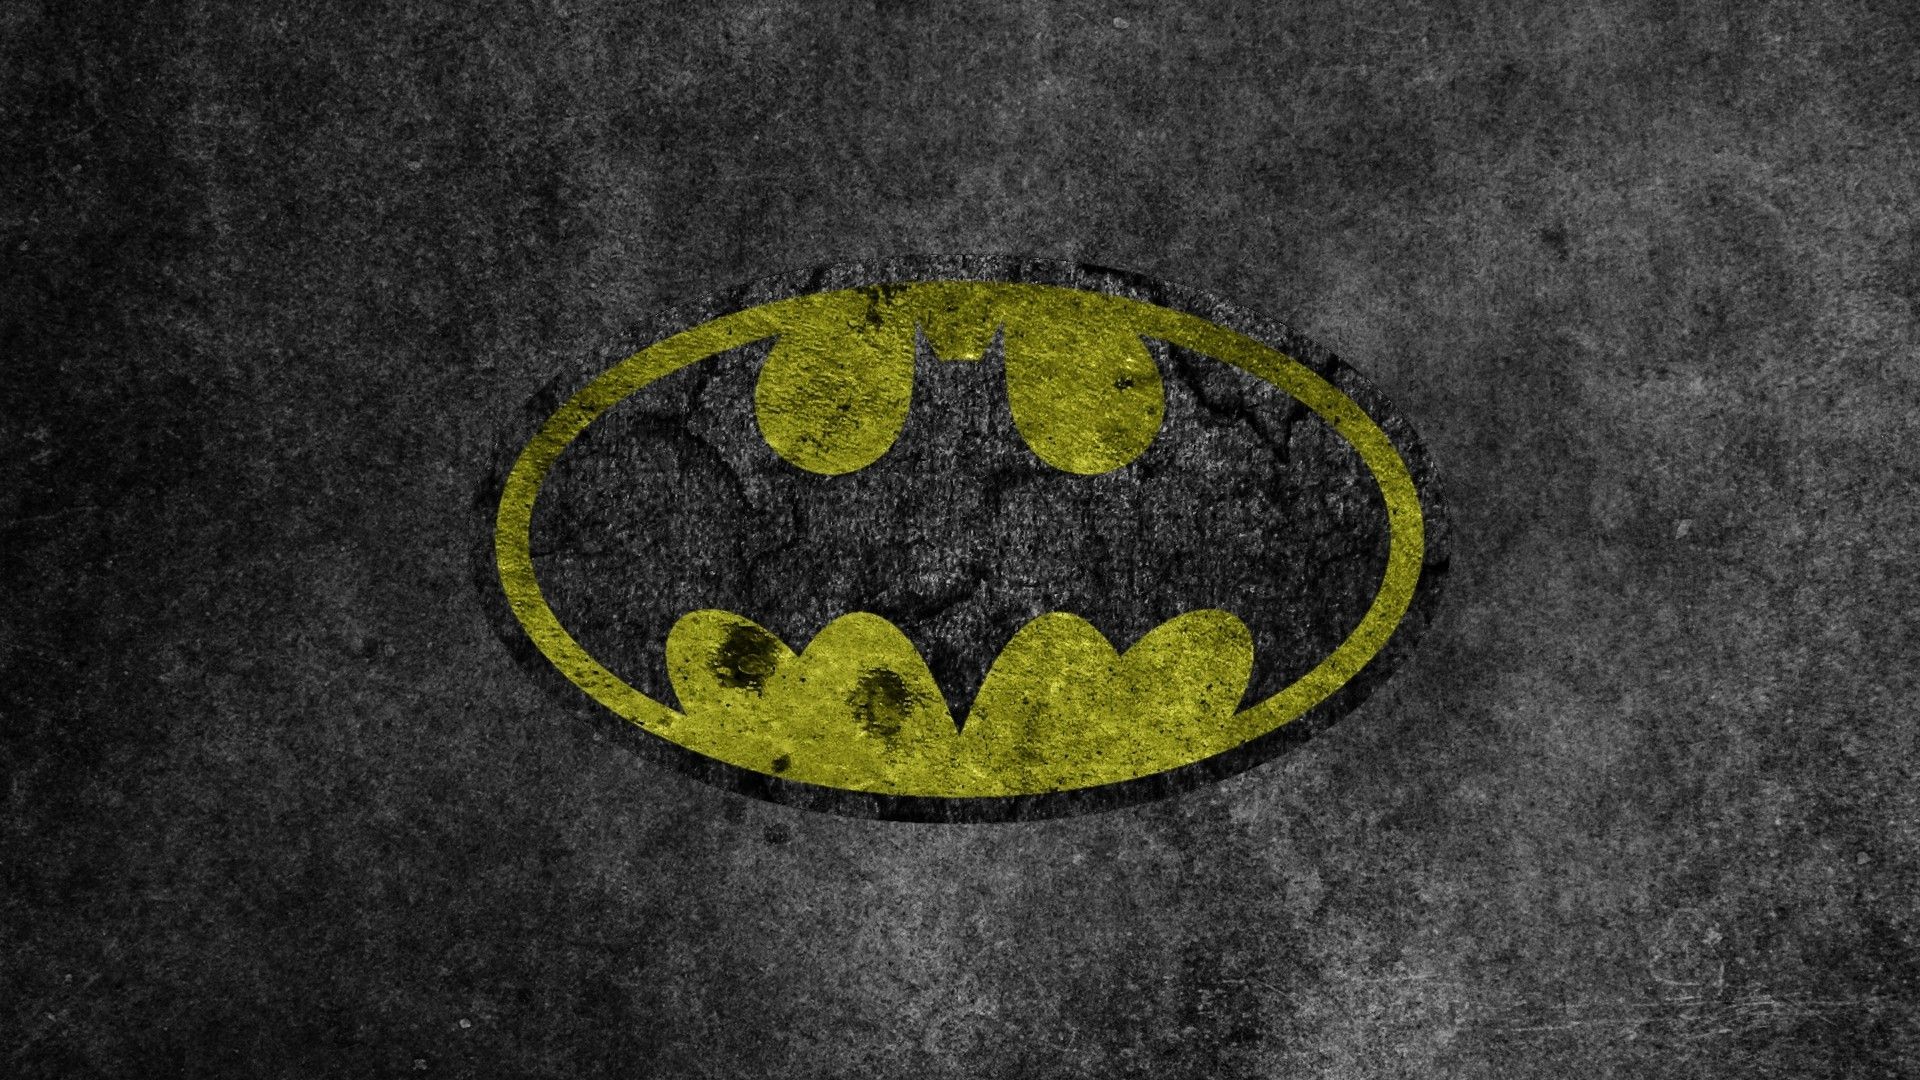  Batman Hintergrundbild 1920x1080. Batman. Batman wallpaper, Batman art, Cool batman wallpaper